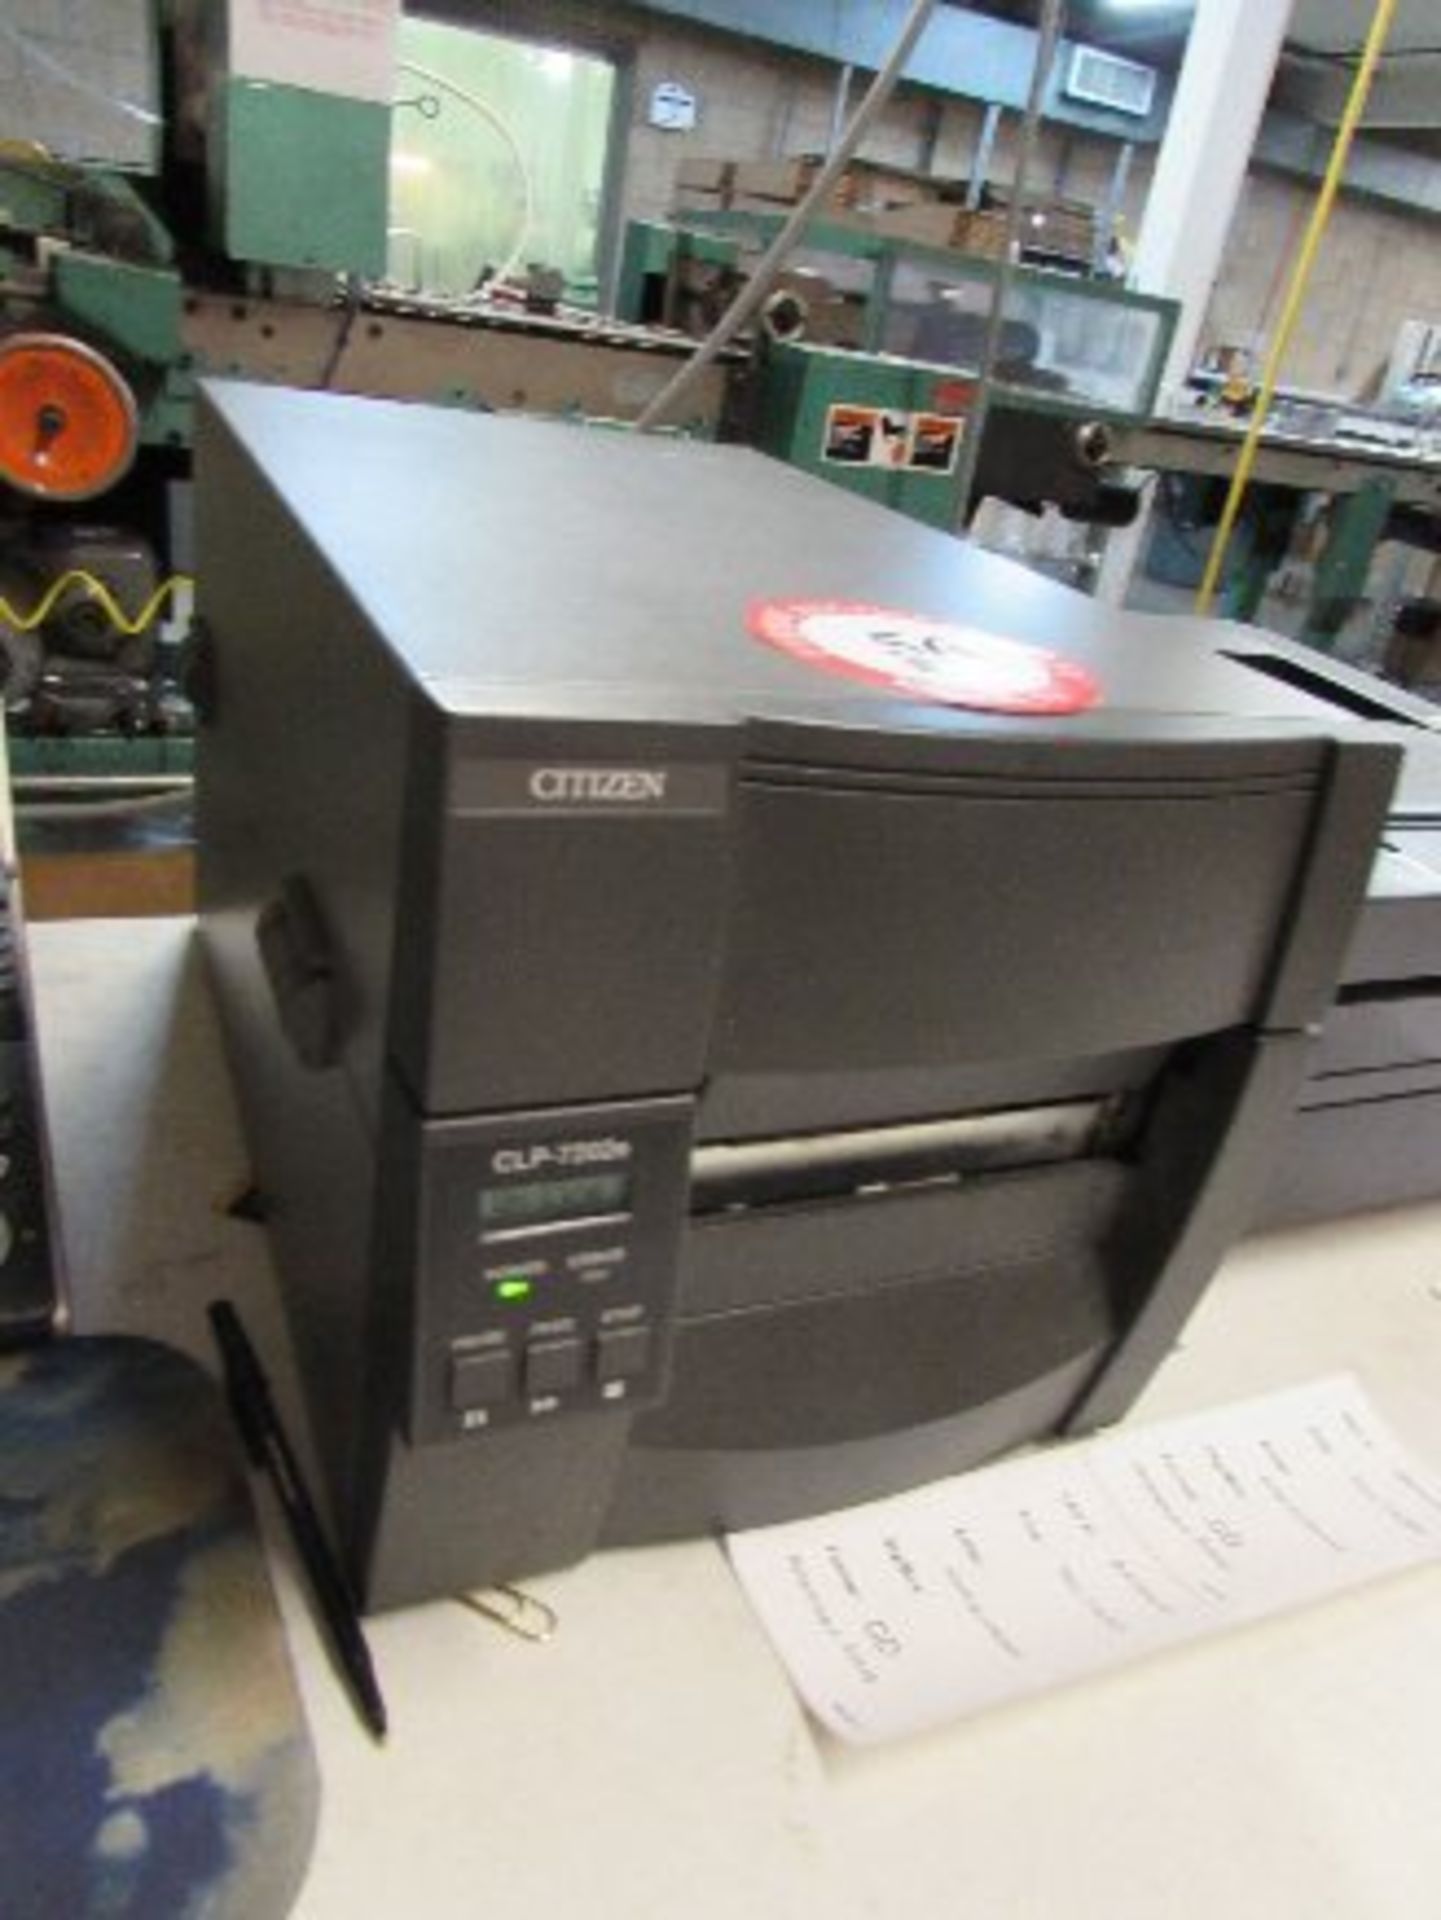 Citizen Mdl. CLP-7202E Thermal Label Printer